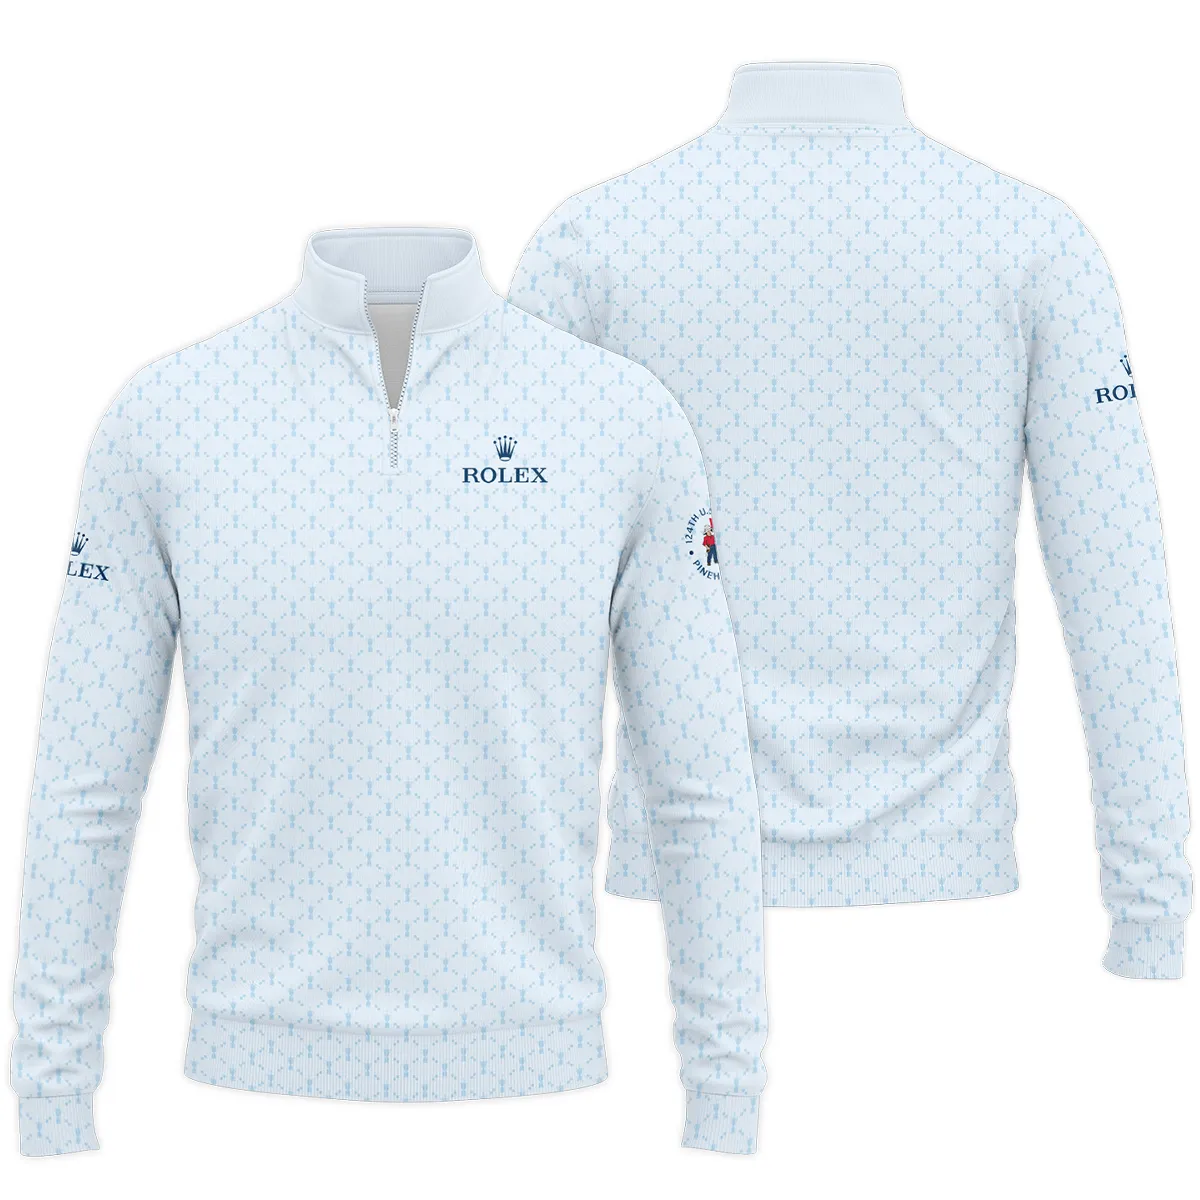 Golf Sport Pattern Blue Sport Uniform 124th U.S. Open Pinehurst Rolex Quarter-Zip Jacket Style Classic